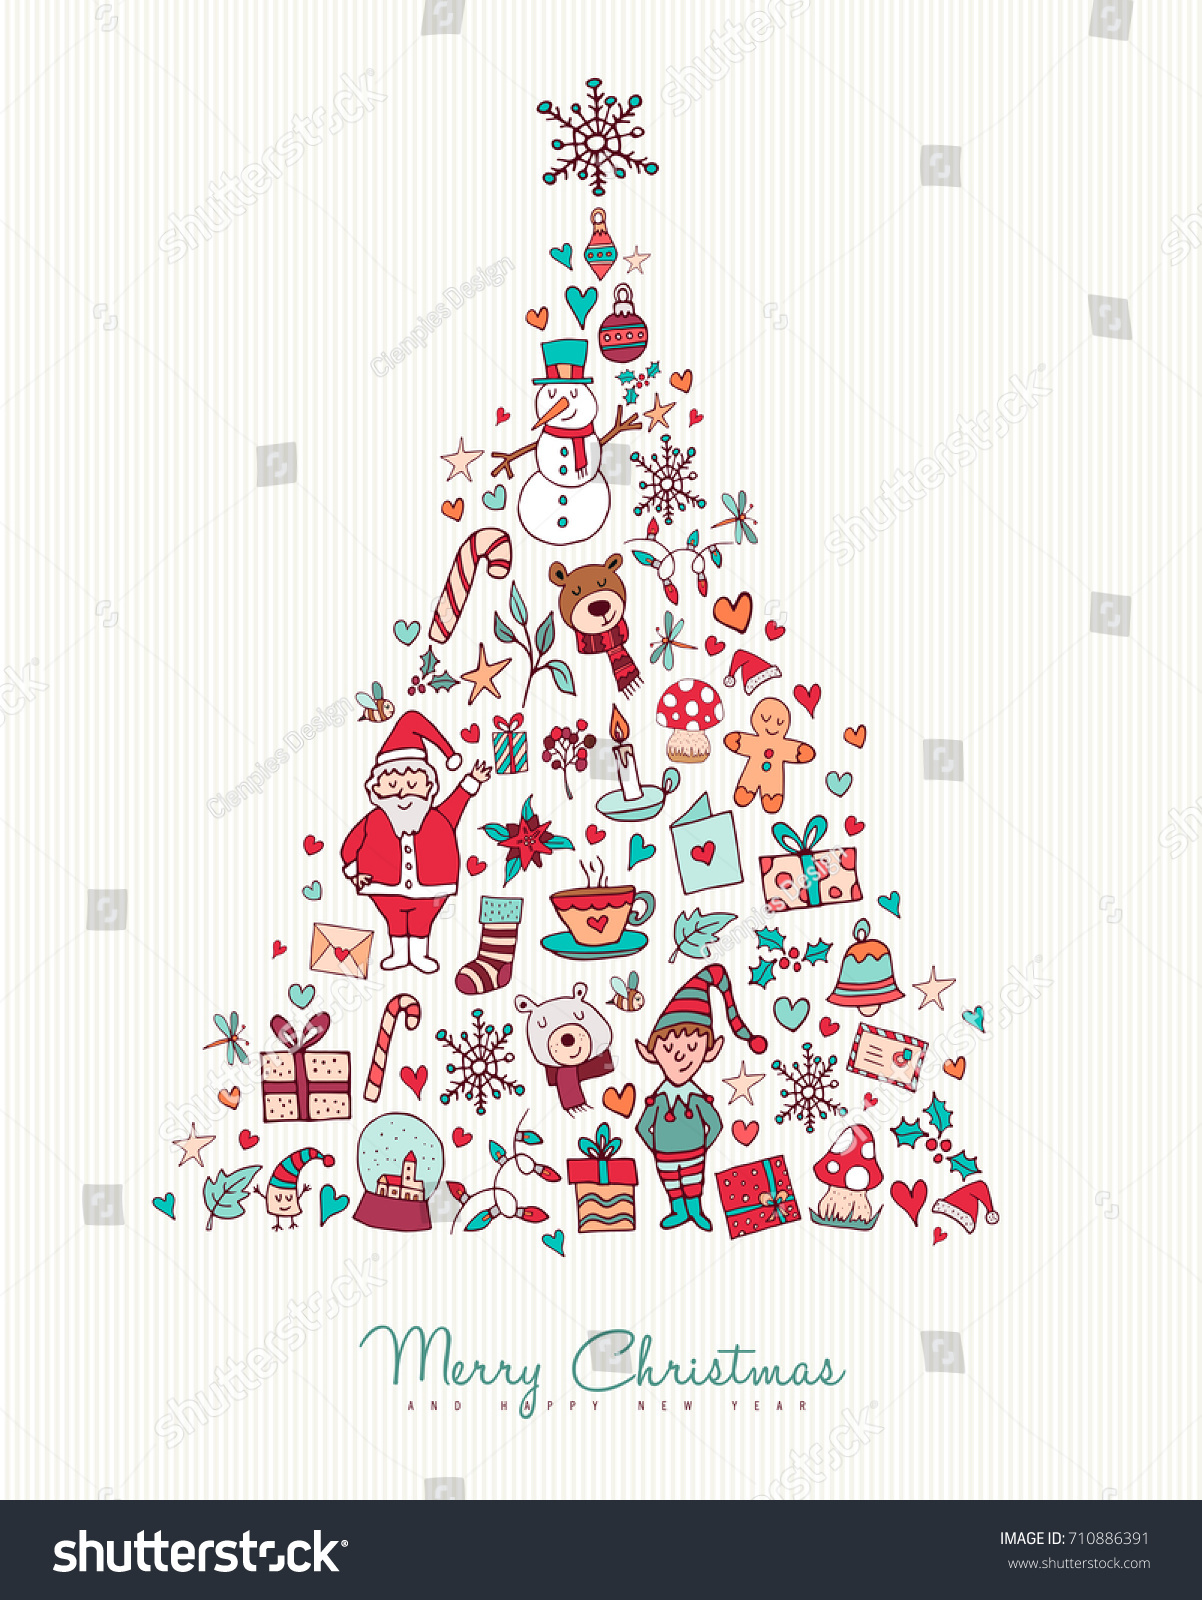 Merry Christmas Happy New Year Hand Stock Vector 710886391 - Shutterstock